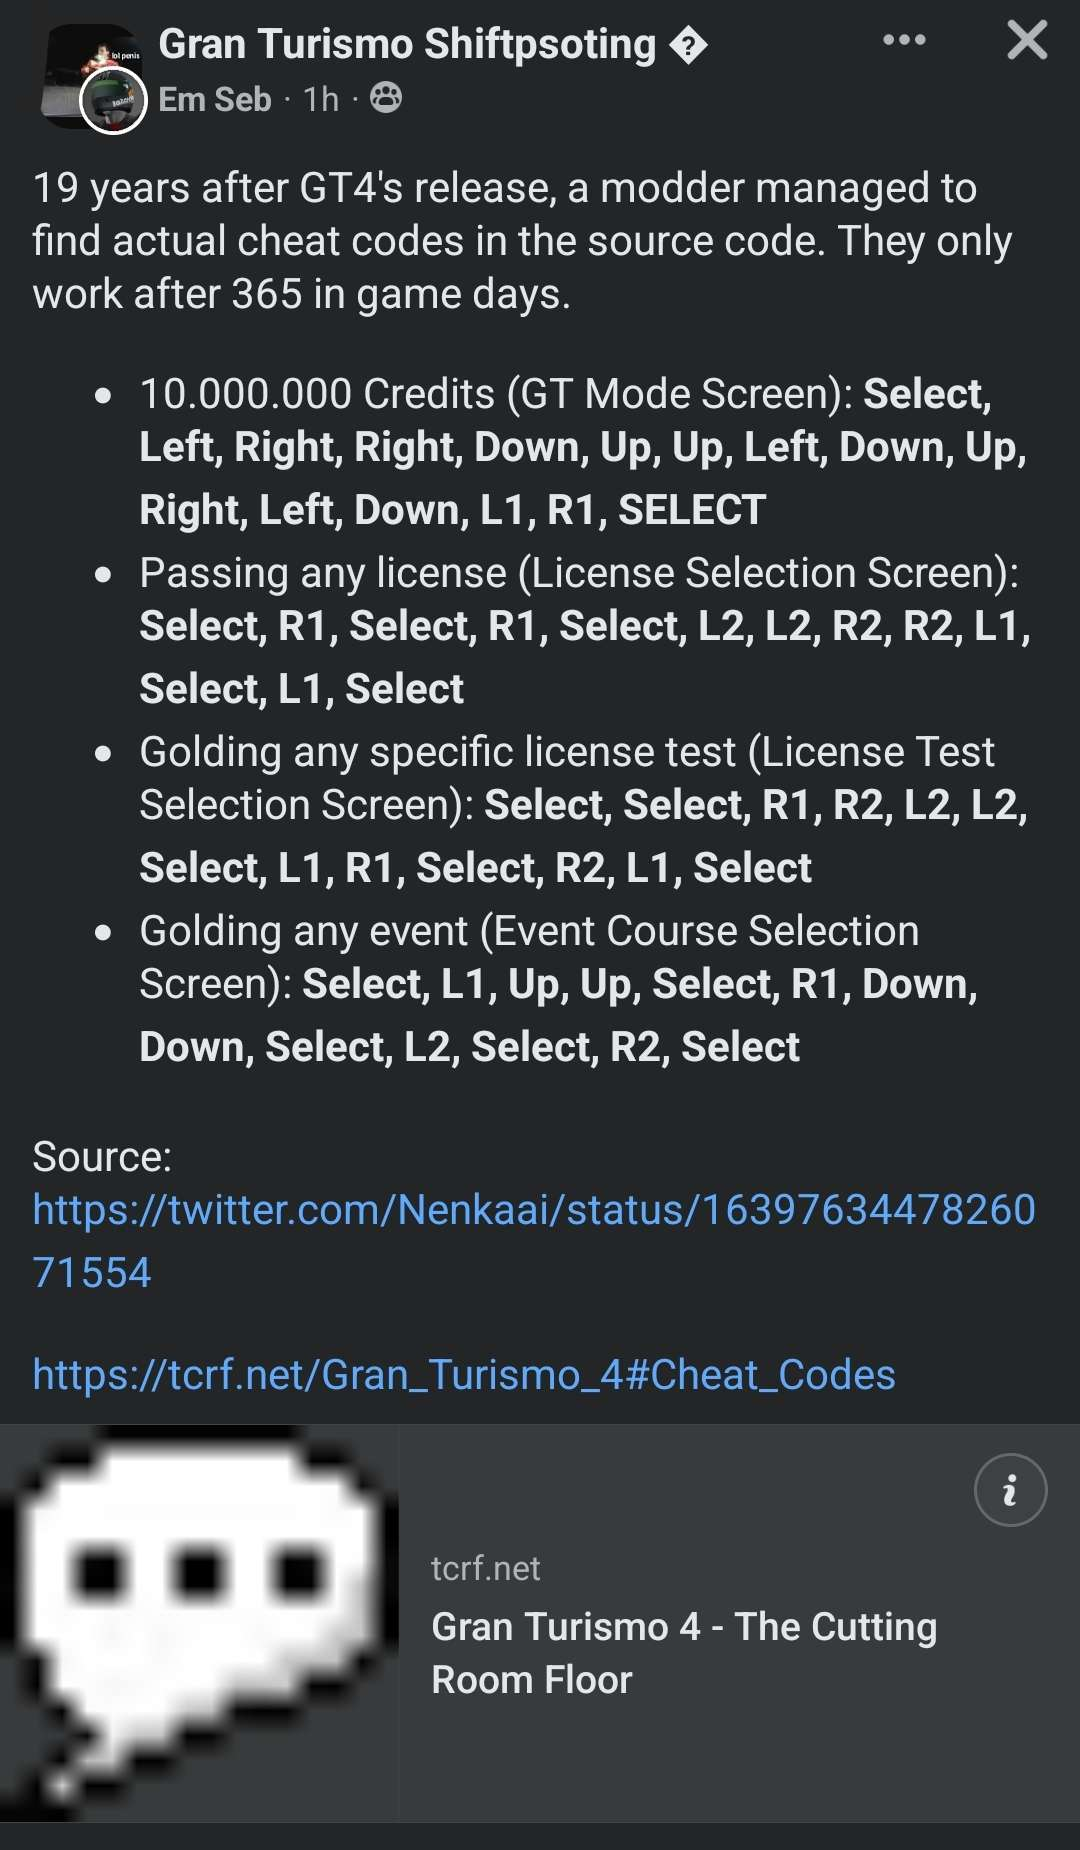 GT4 has cheat codes